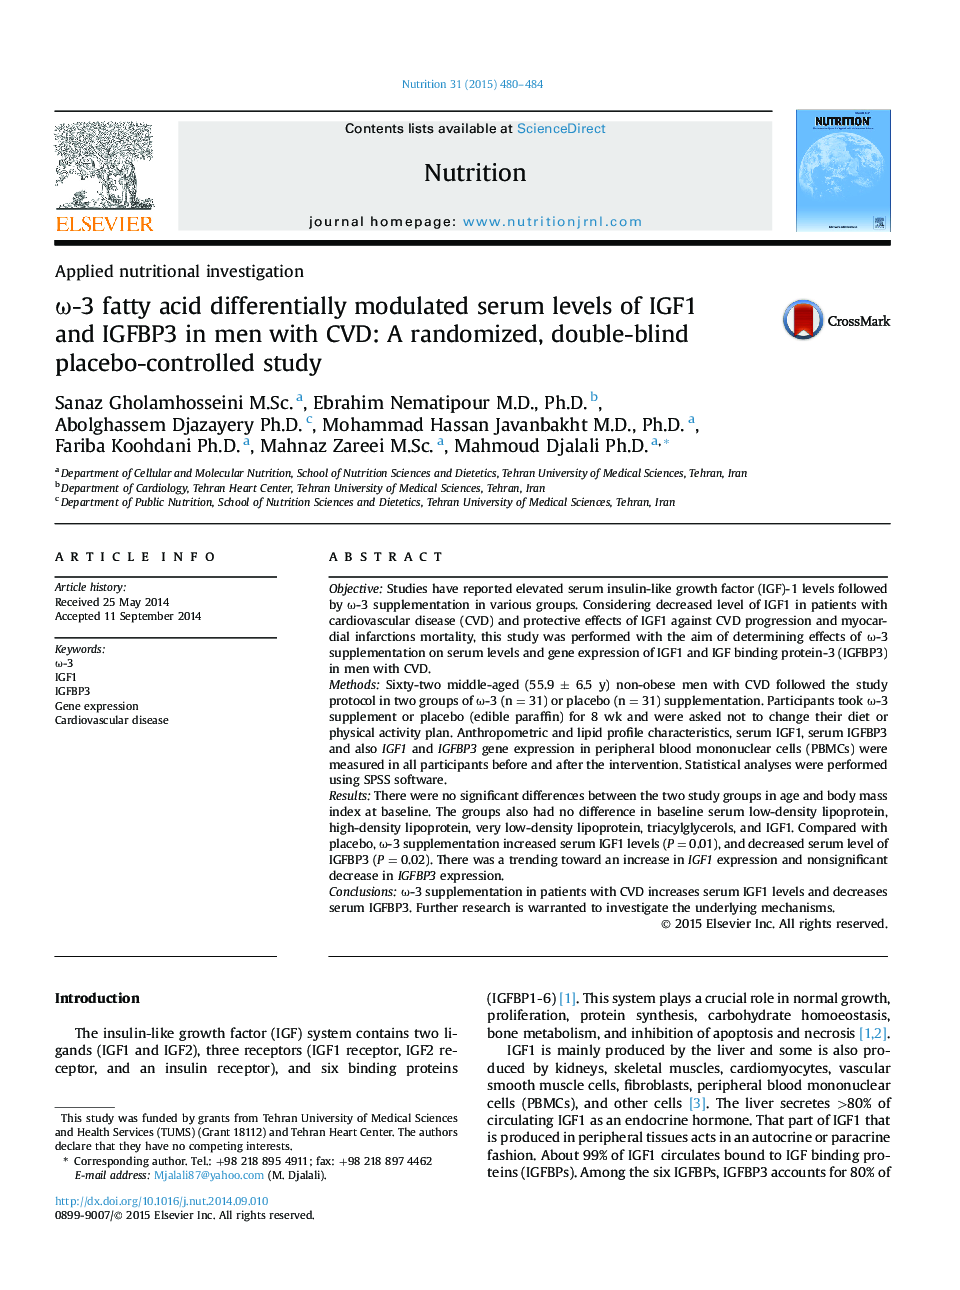 Applied nutritional investigationÏ-3 fatty acid differentially modulated serum levels of IGF1 and IGFBP3 in men with CVD: A randomized, double-blind placebo-controlled study